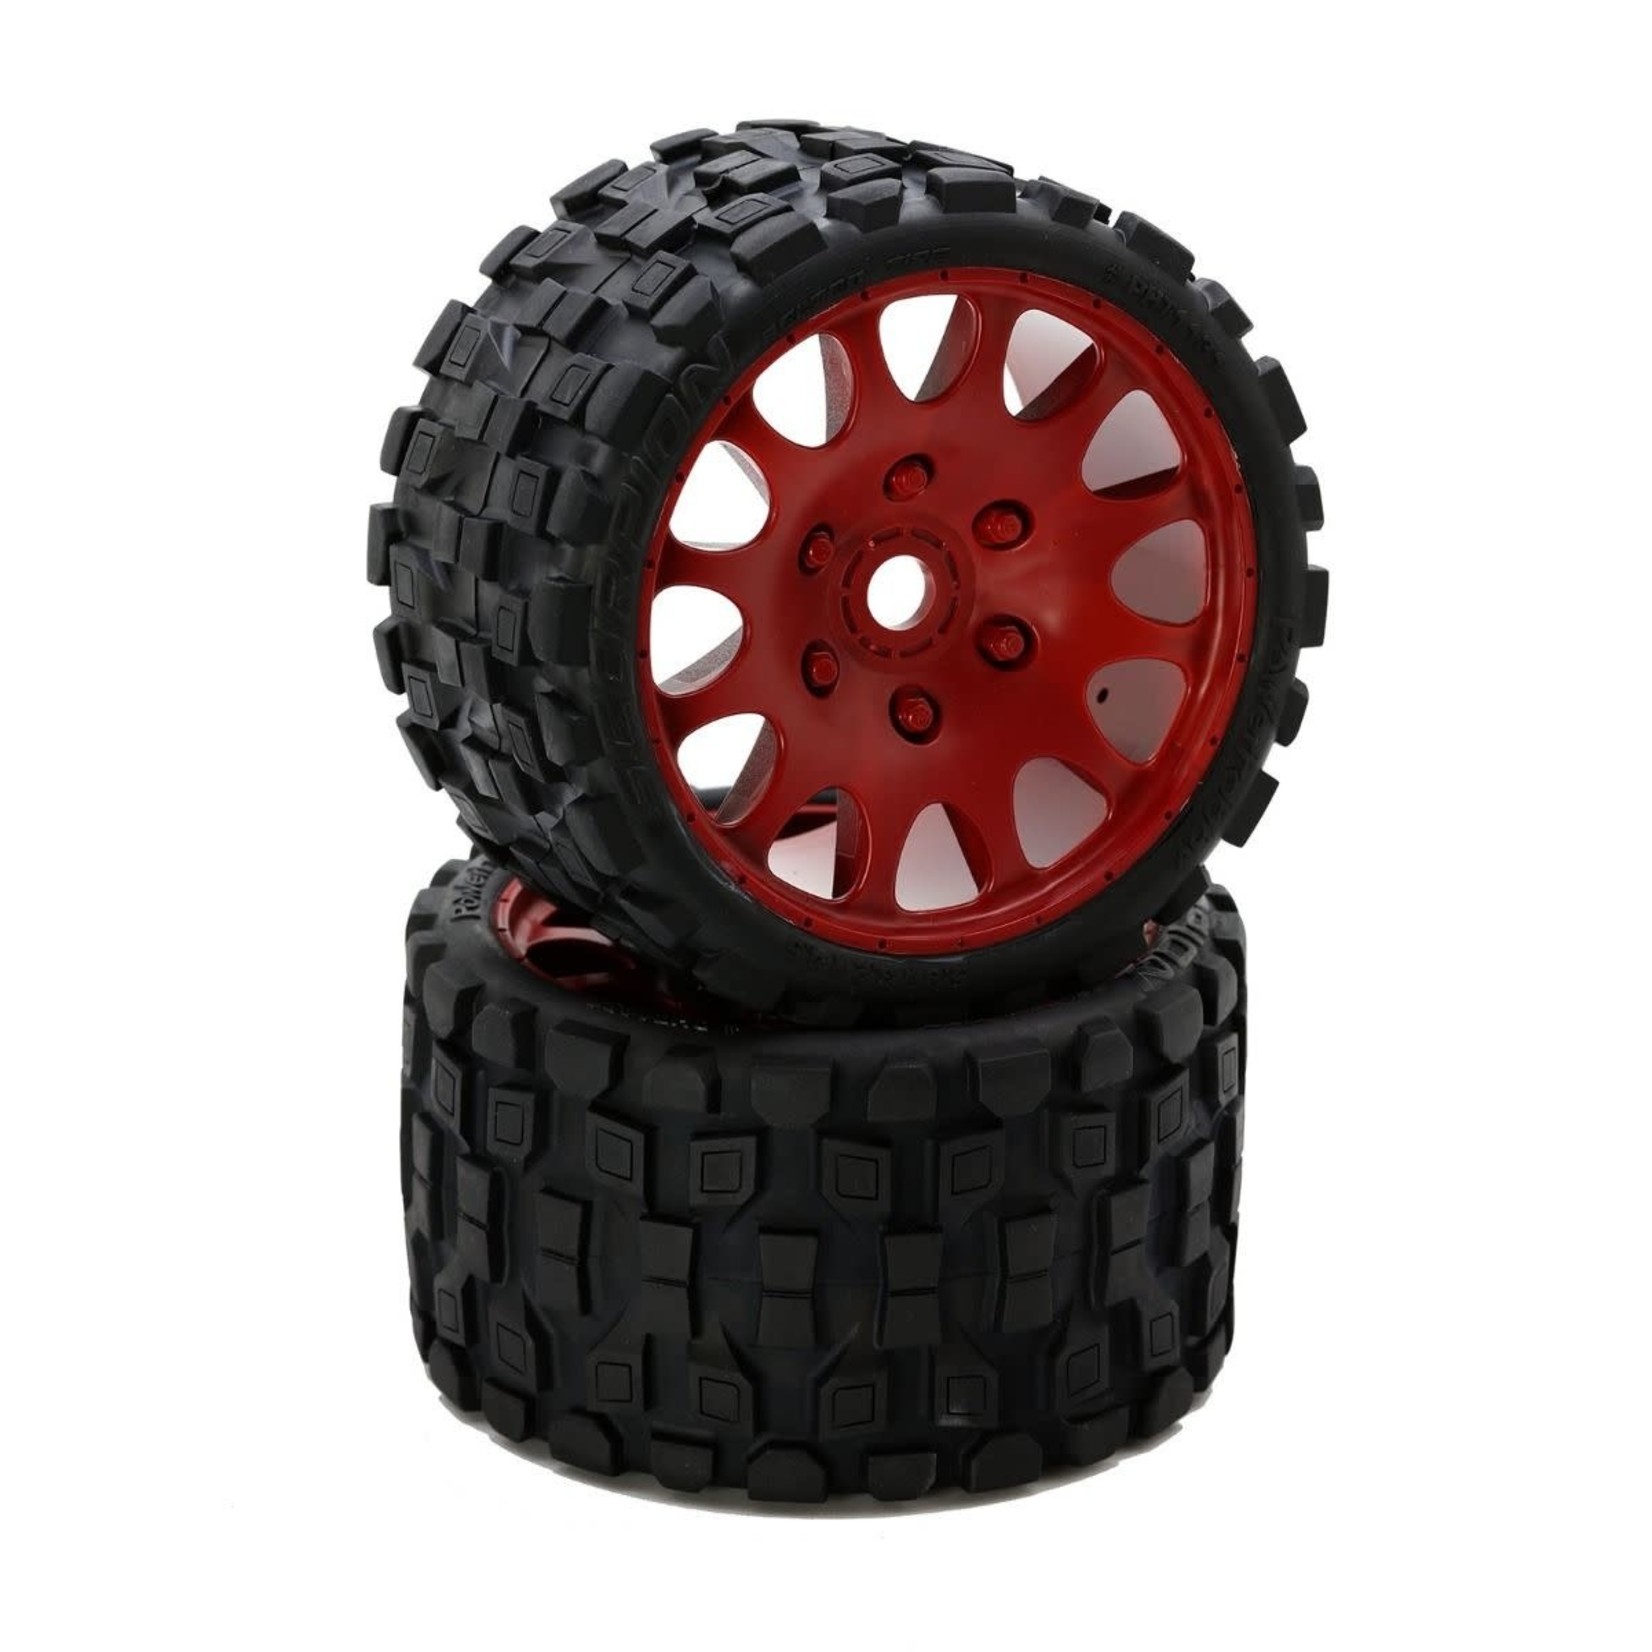 Power Hobby Power Hobby Scorpion Belted Monster Truck Tires/Wheels w/ 17mm Hex (2) Sport-Red #PHBPHT1131SRED